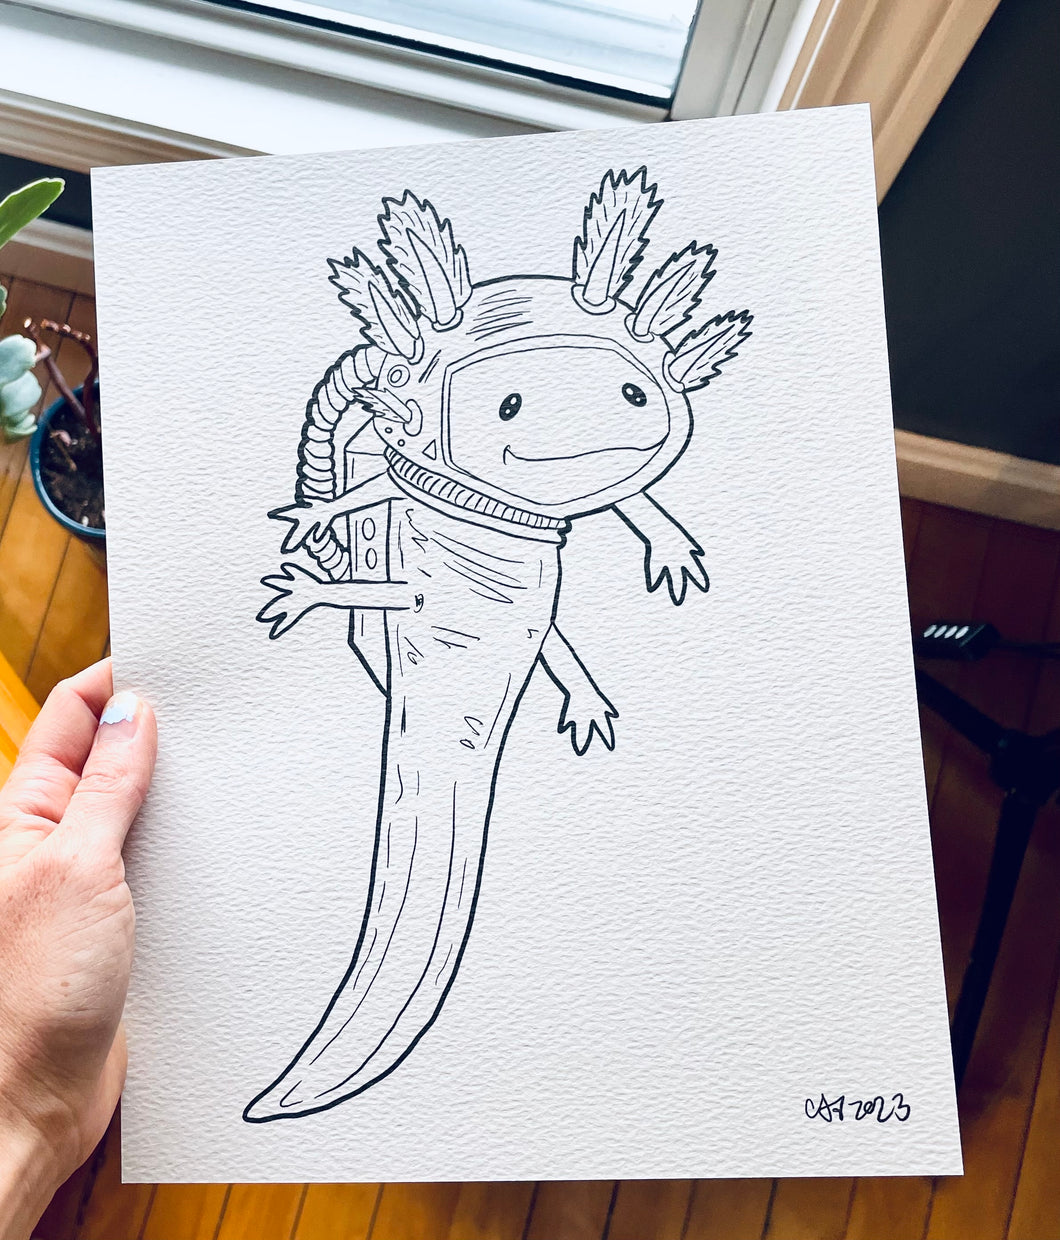 Axolotl coloring page!